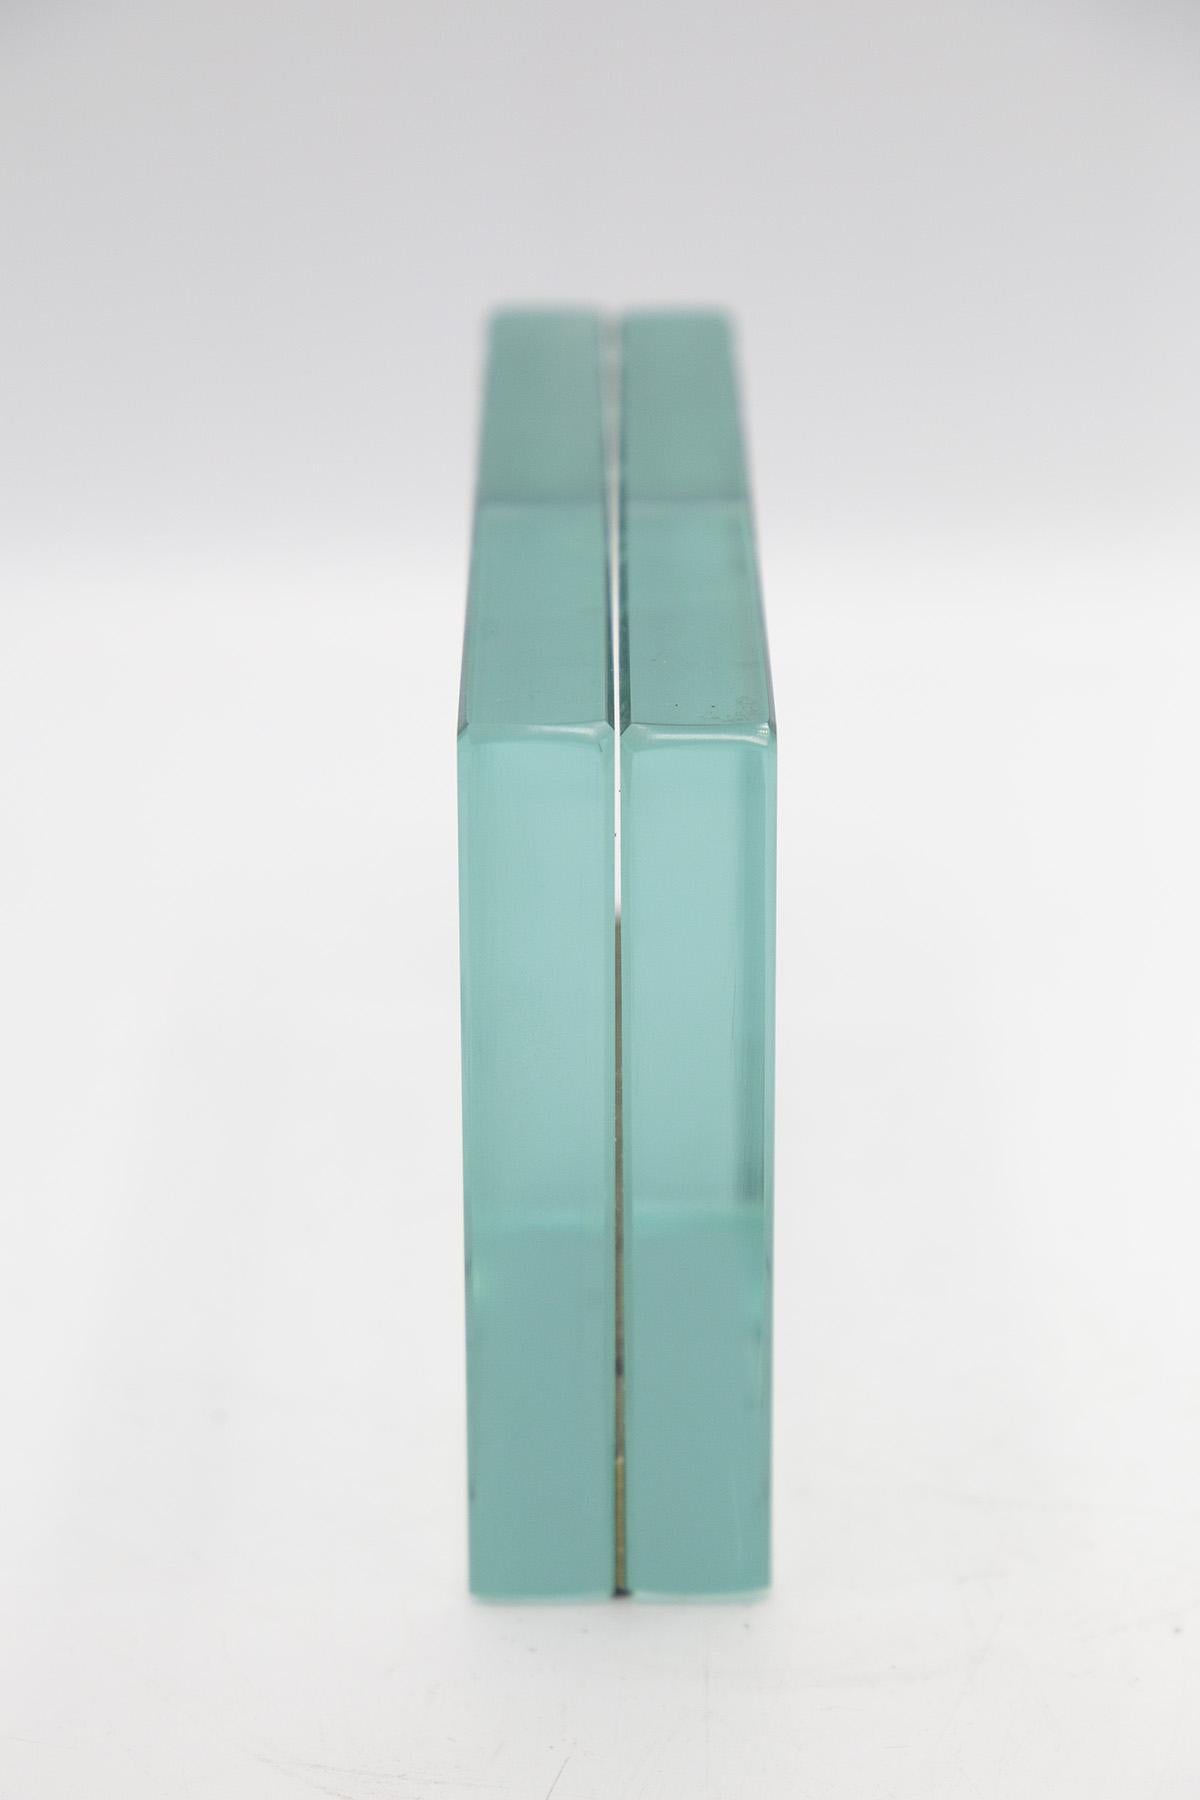 Mid-Century Modern Fontana Arte Vintage Glass Photo Frame